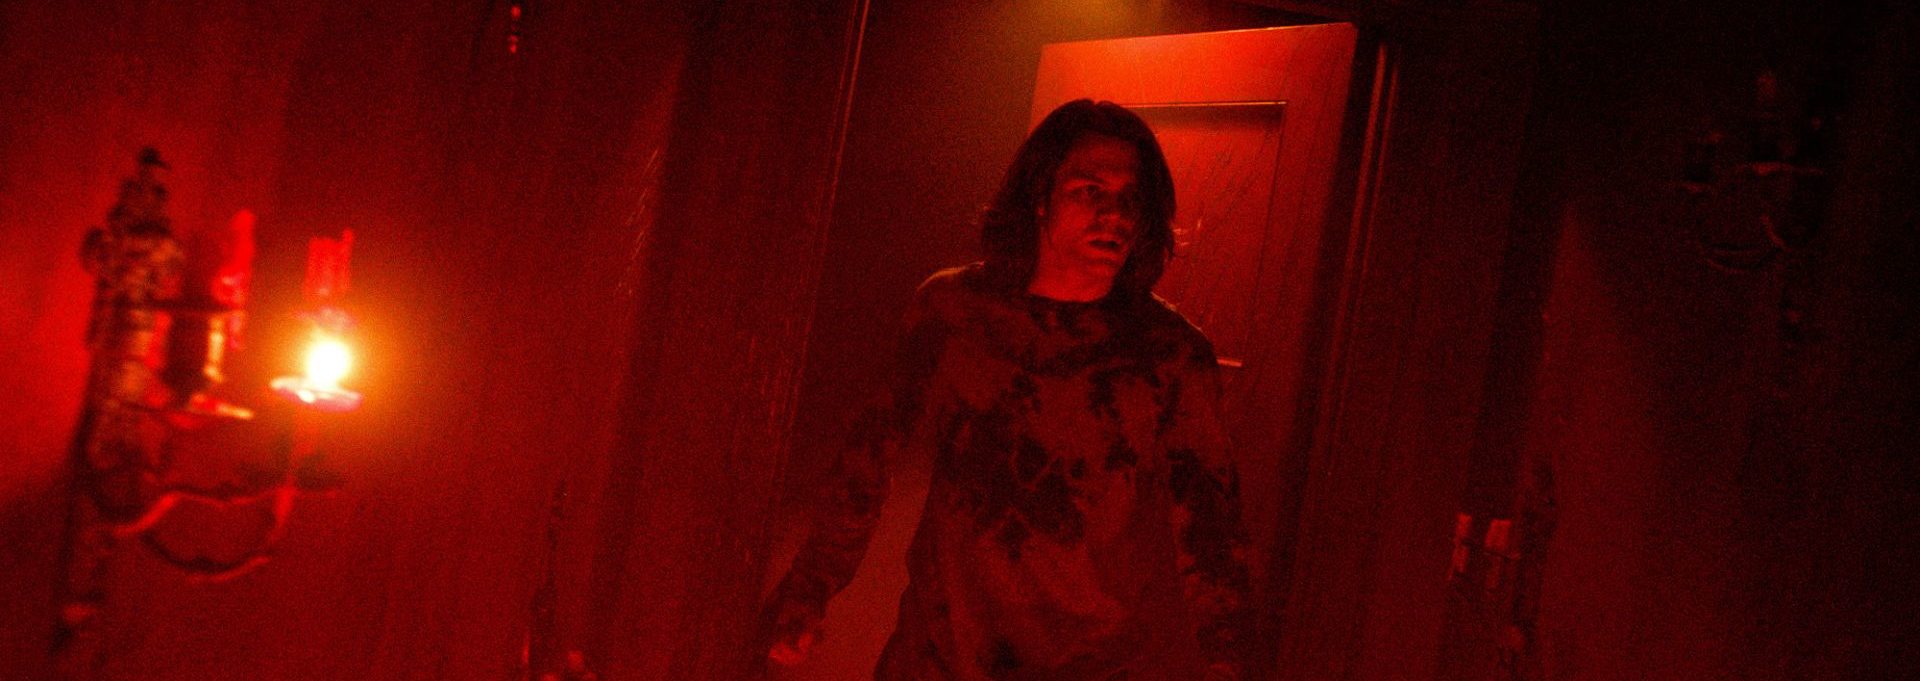 Insidious: The Red Door mit neuem furchterregendem Trailer